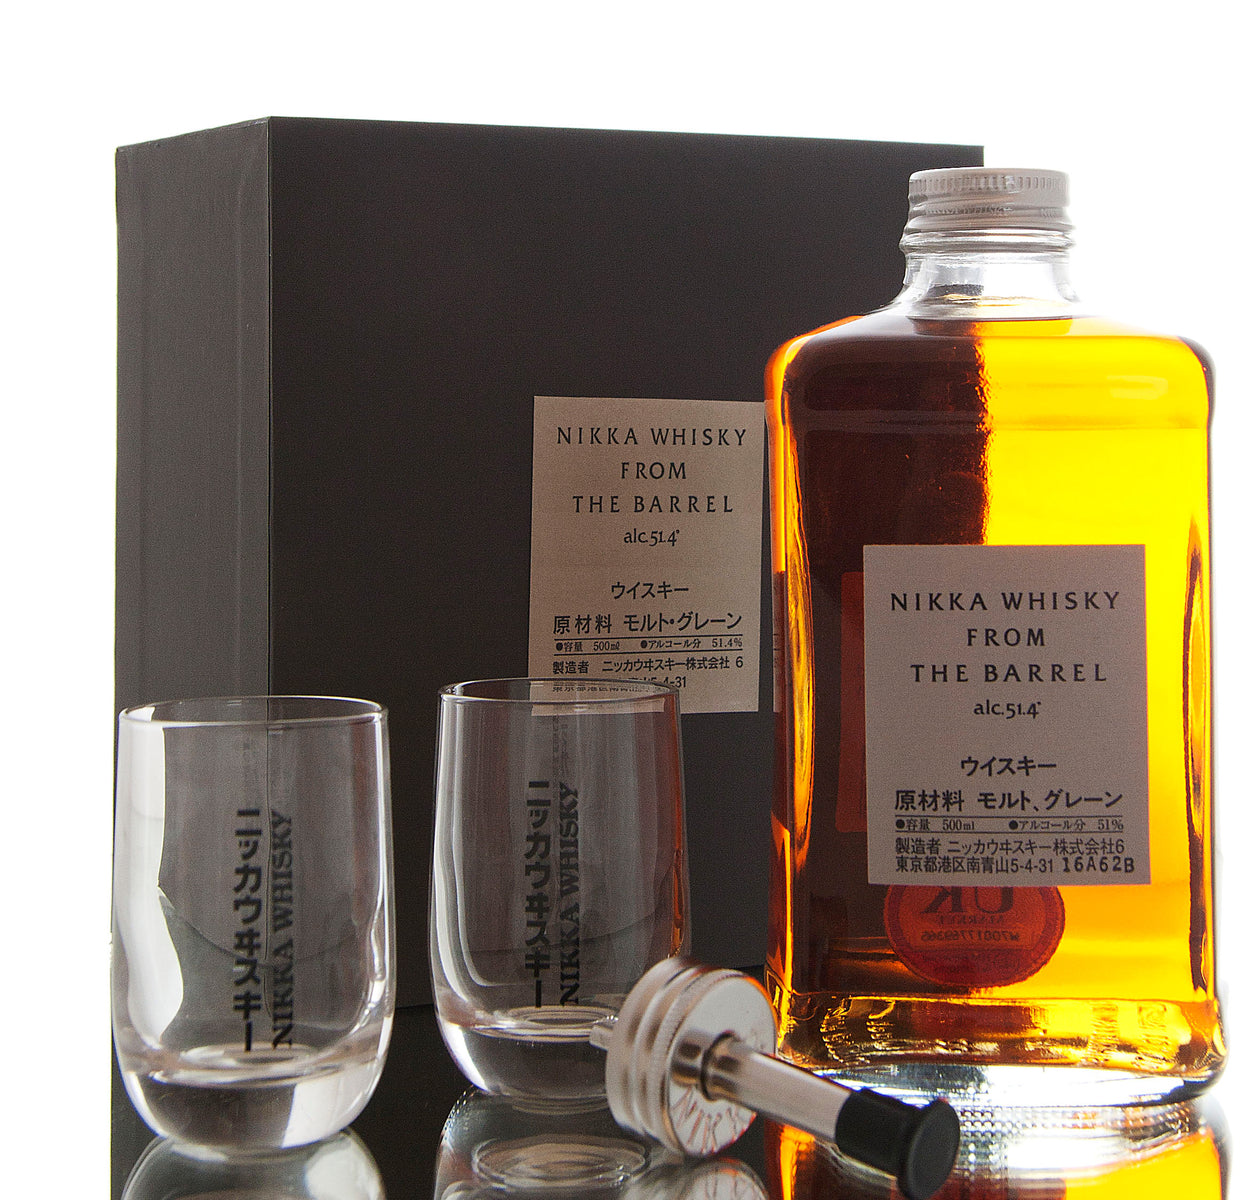 Nikka From Abbey Gift The Glass / Japanese Barrel — / Set Whisky Whisky